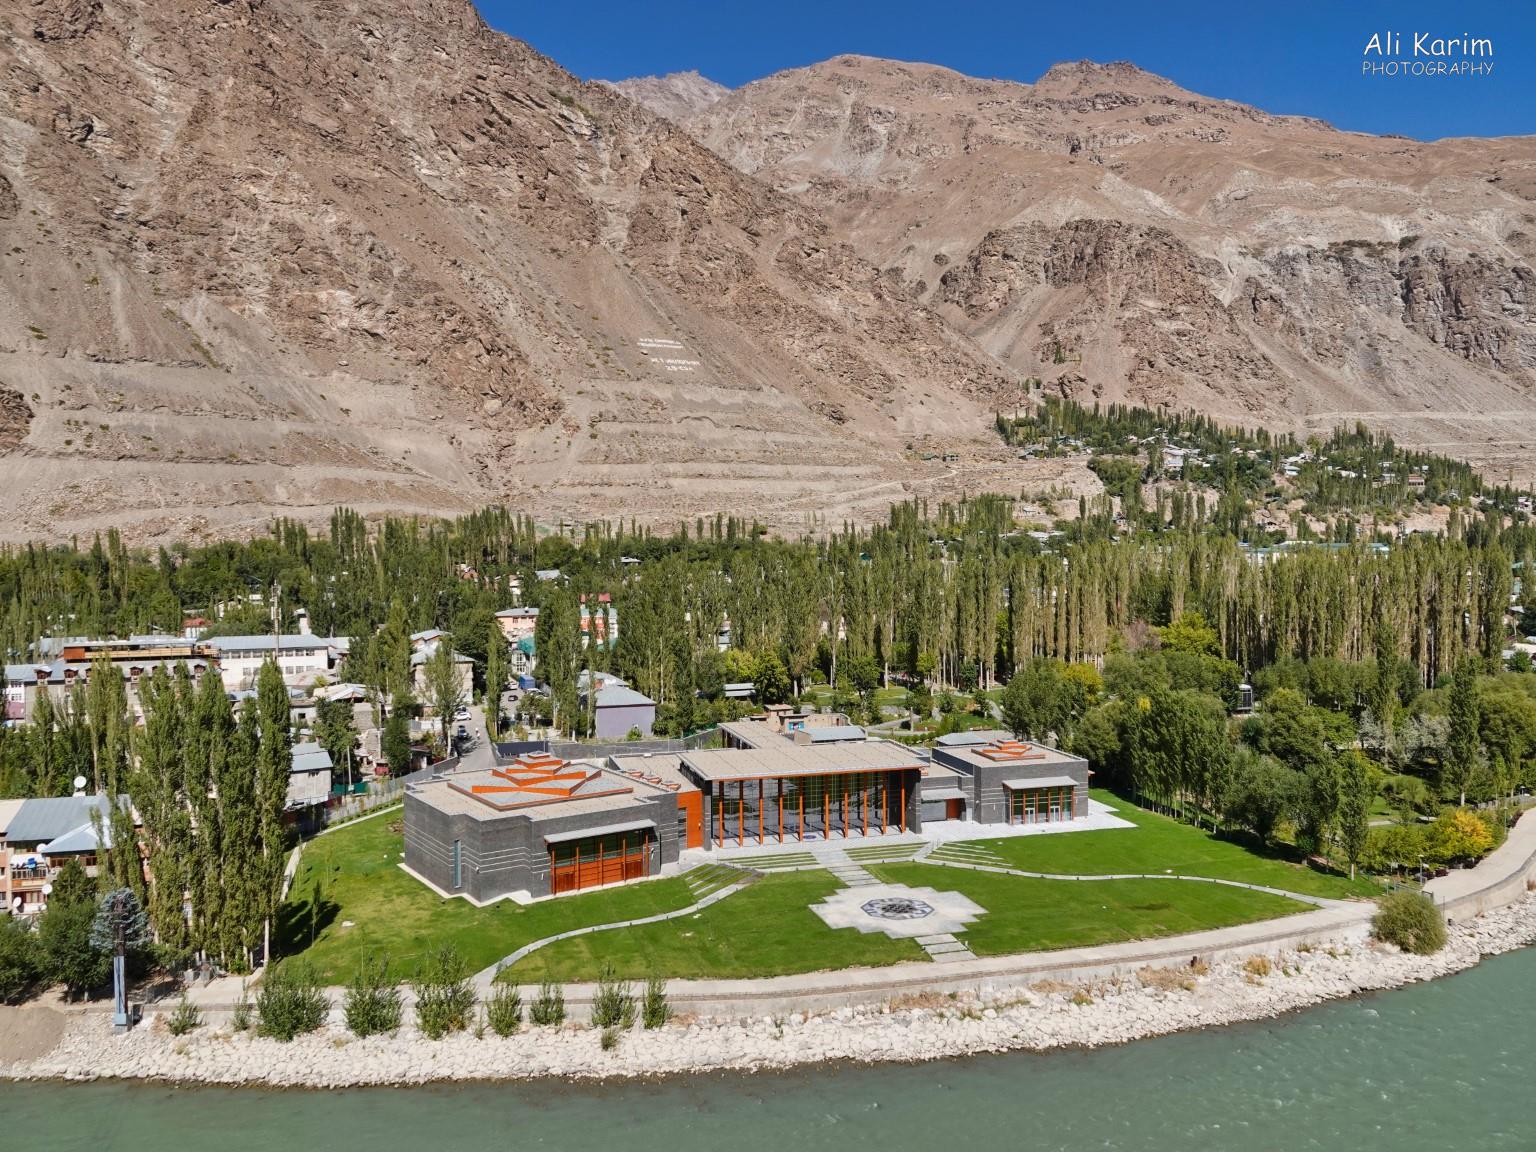 Onto Khorog, Tajikistan, A great viewpoint of Khorog, with the Khorog Ismaili Center and Jamatkhana, along the Gunt river